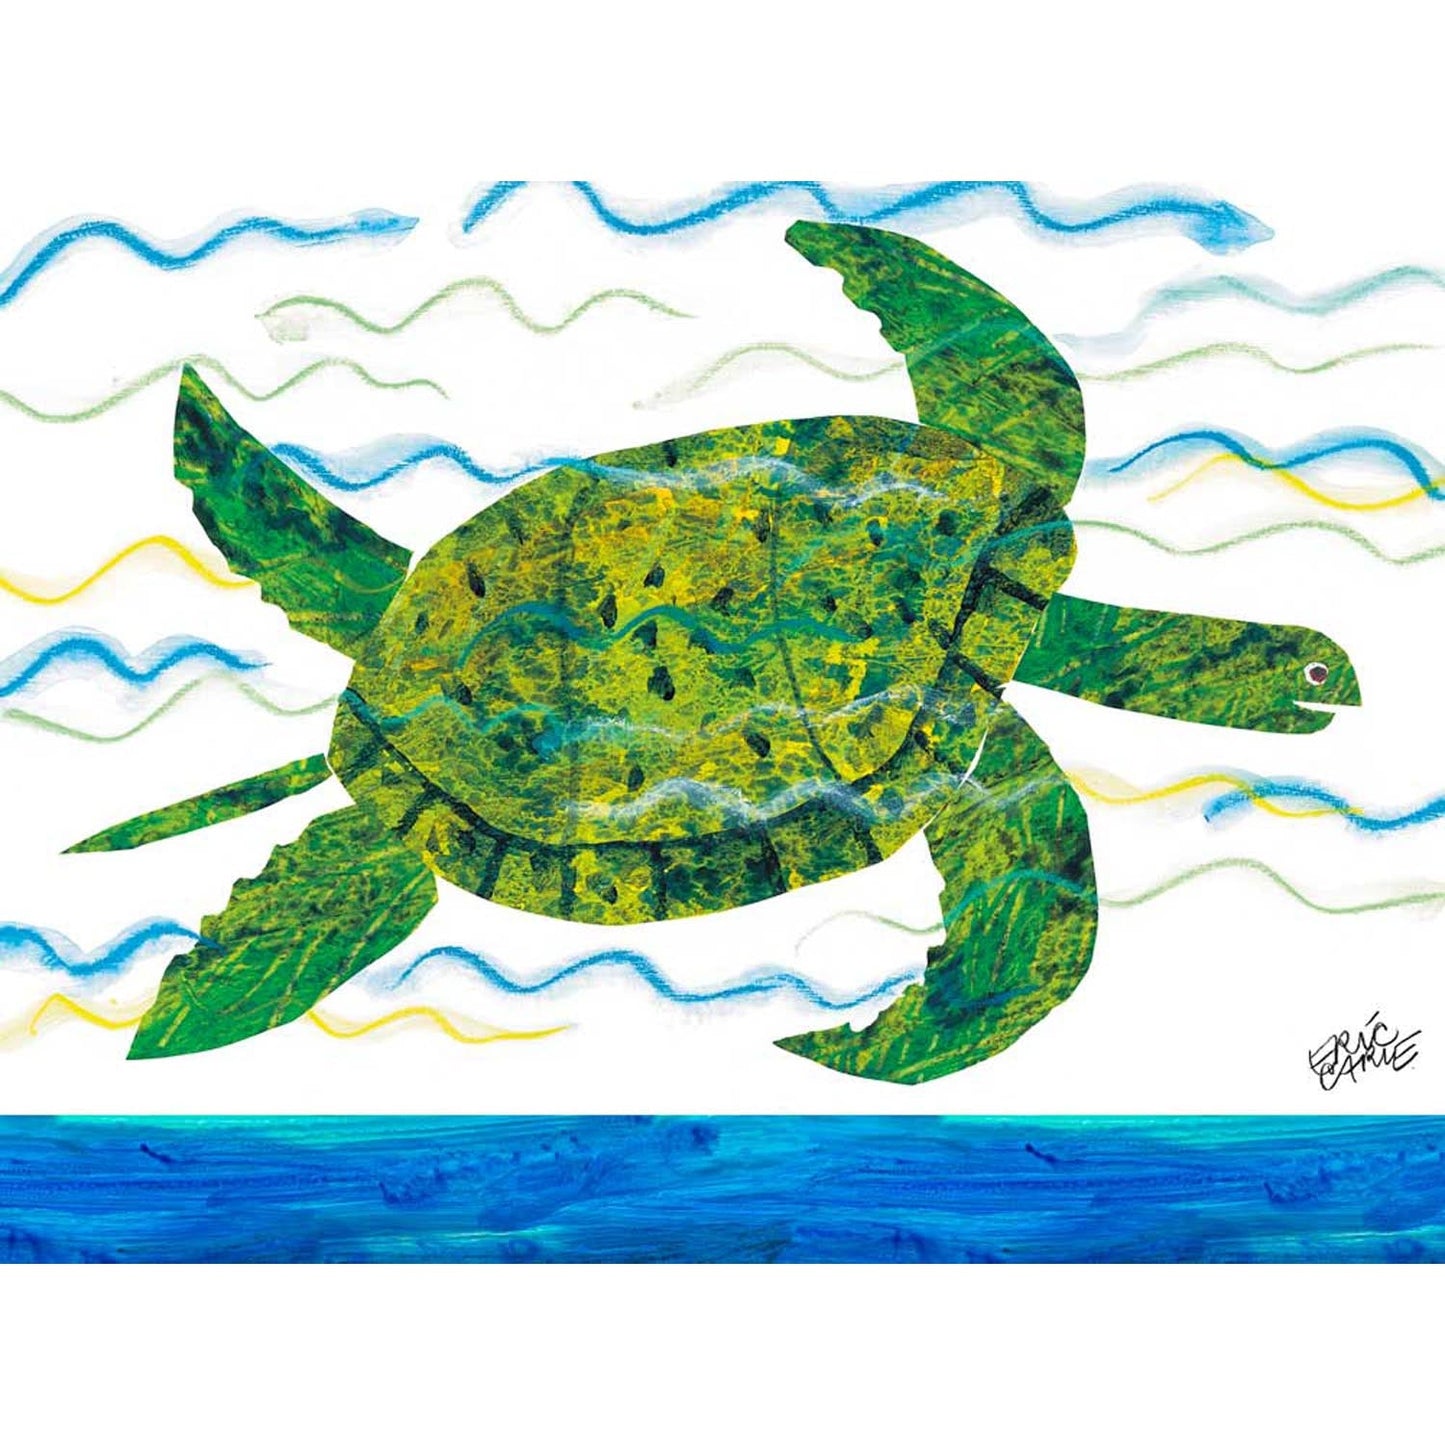 Eric Carle's Sea Turtle Canvas Wall Art